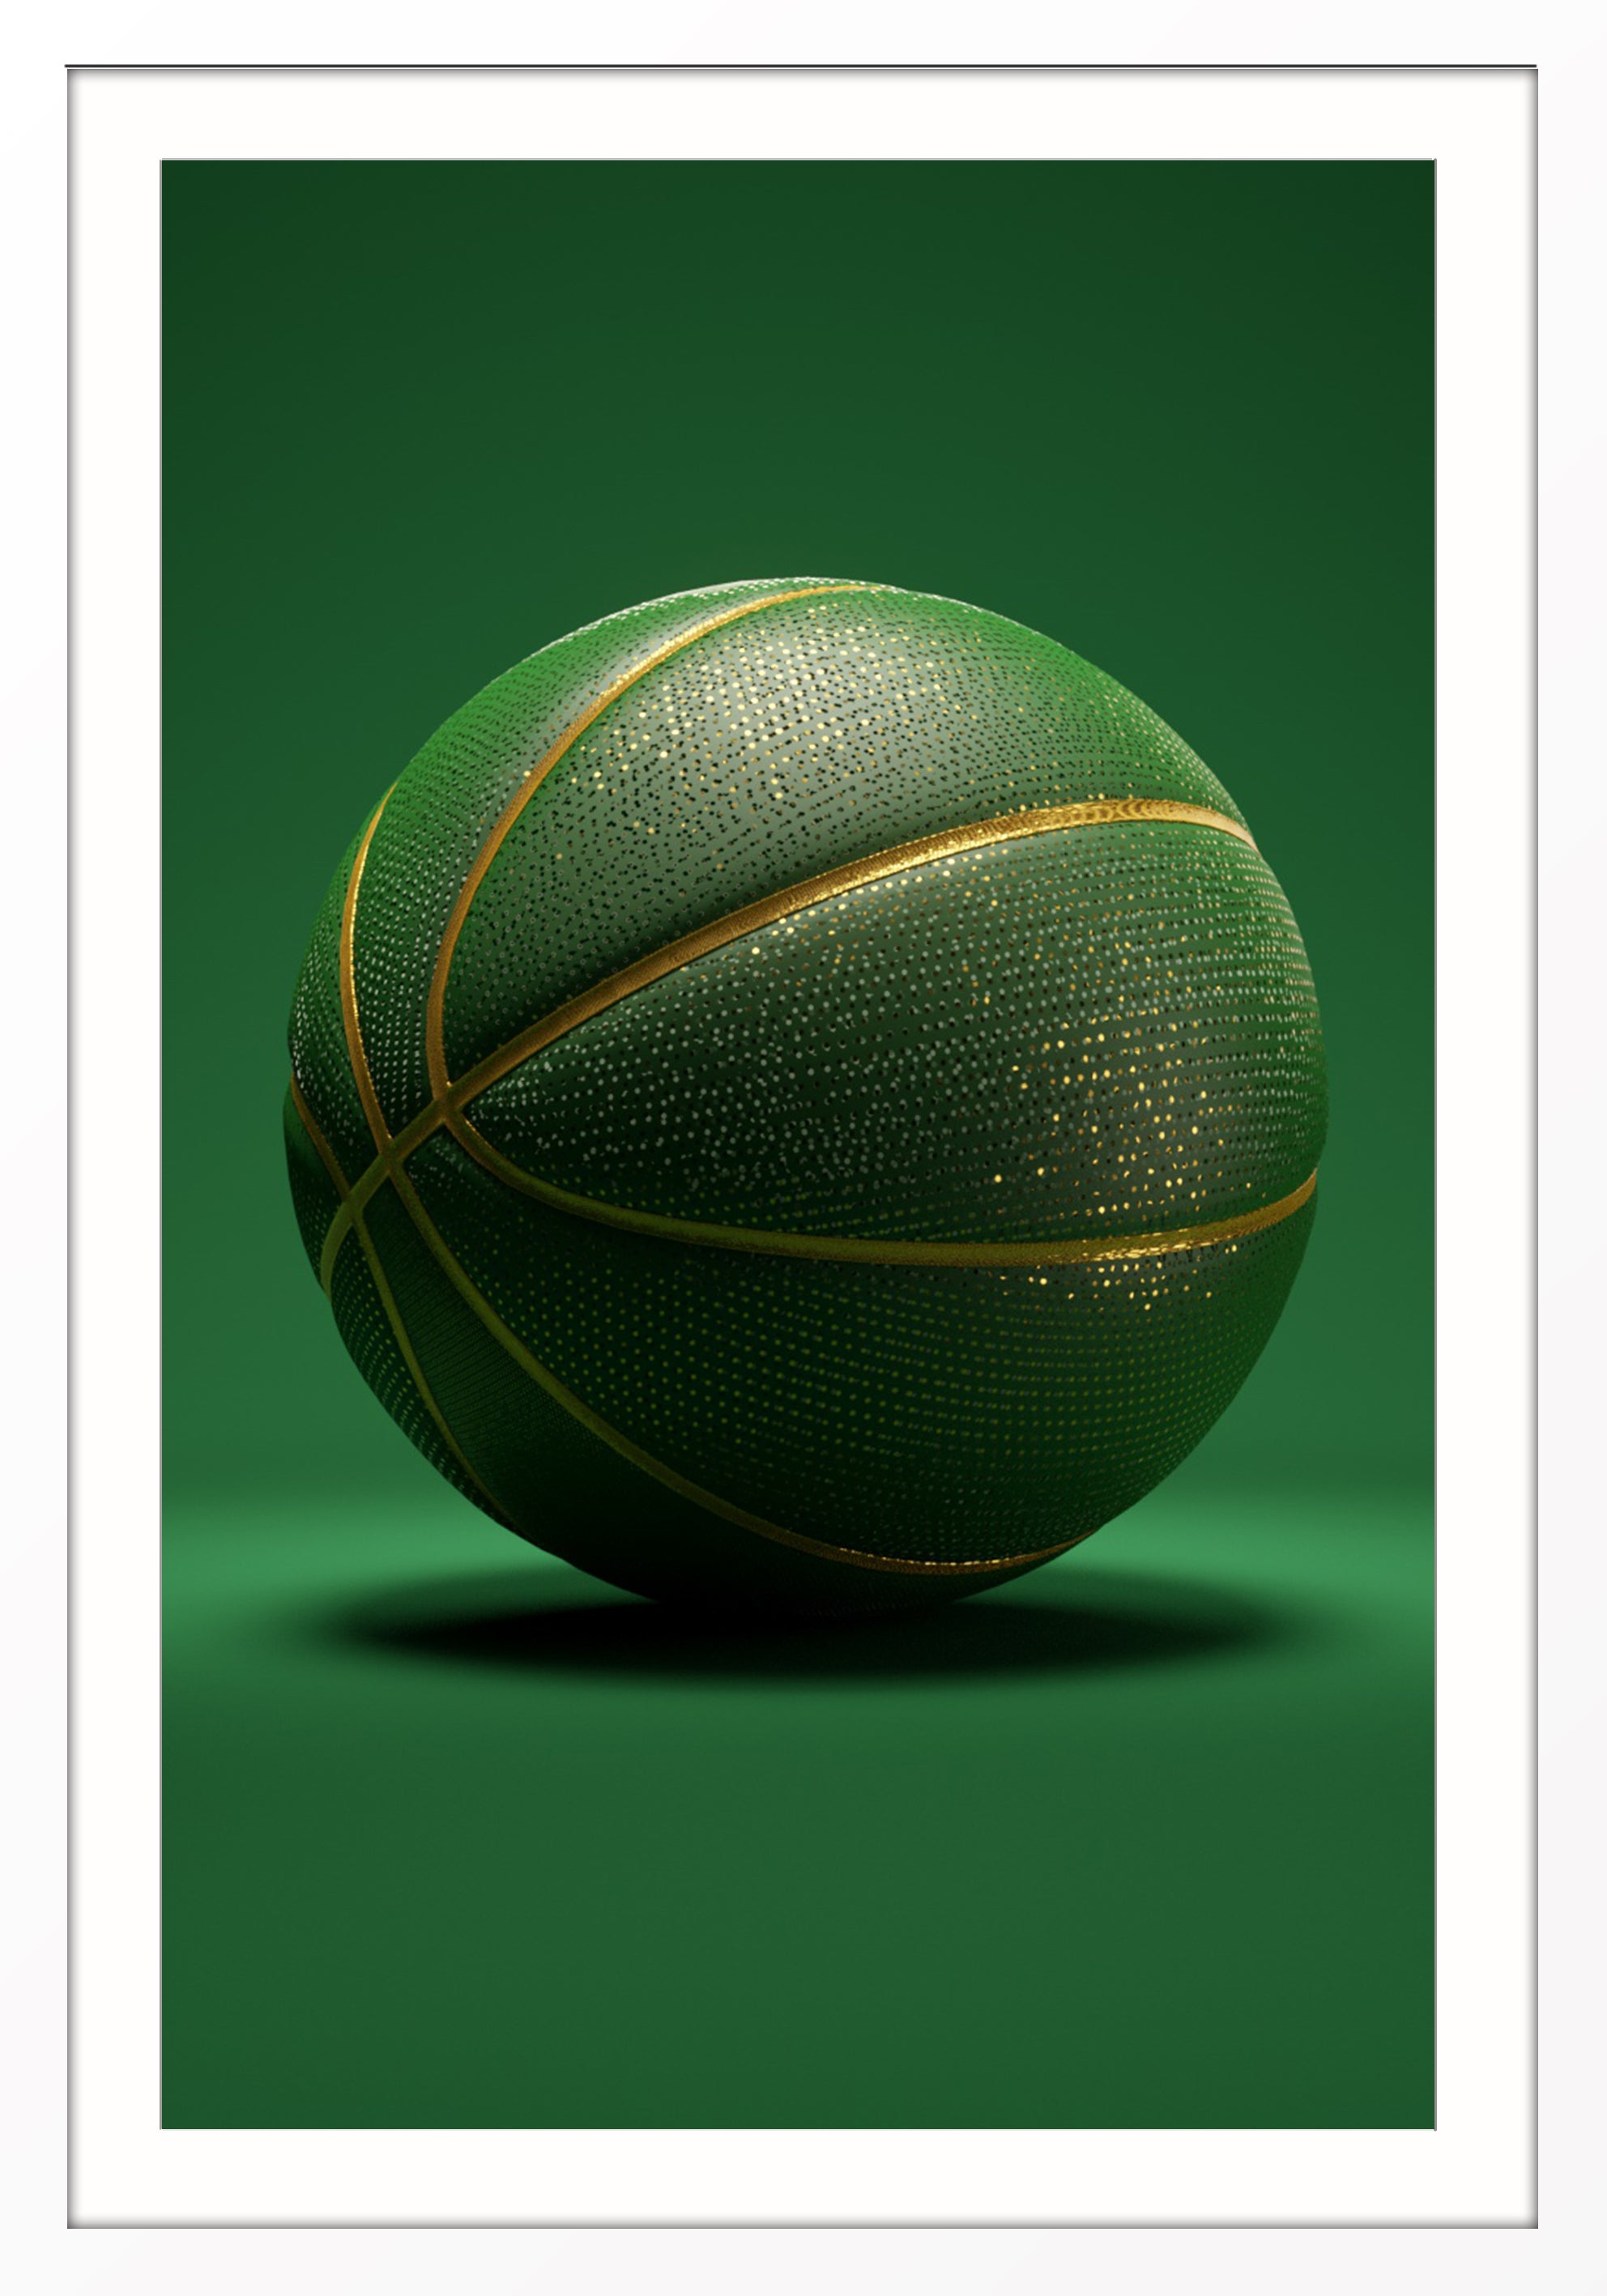 Pine Green Basketball